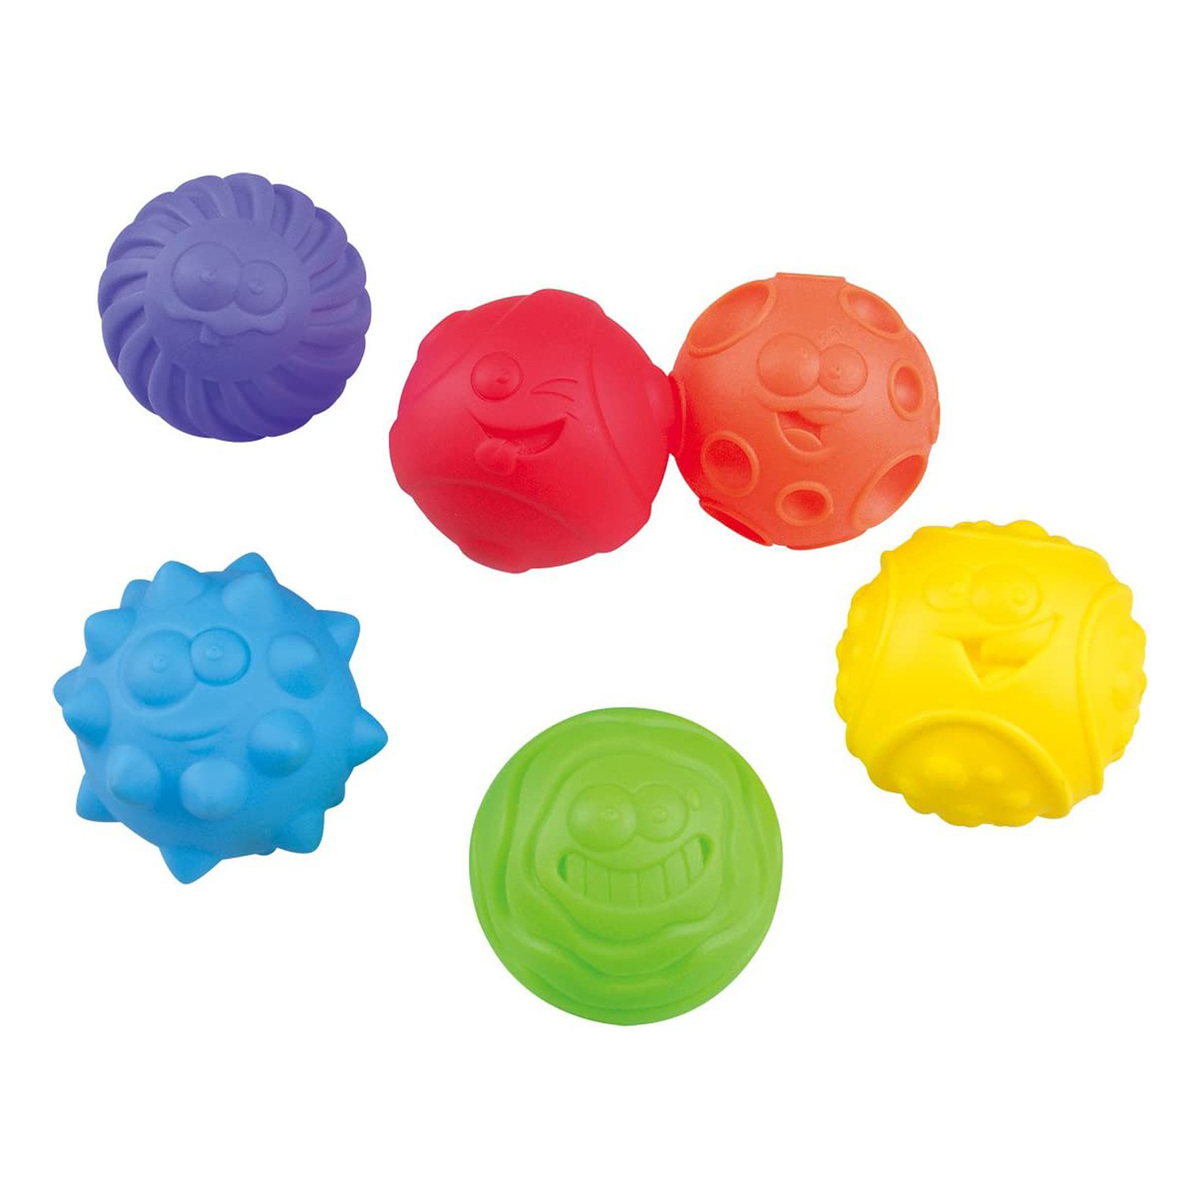 PlayGo Rainbow Textured Balls, 6 Pcs, Multicolor, 2403